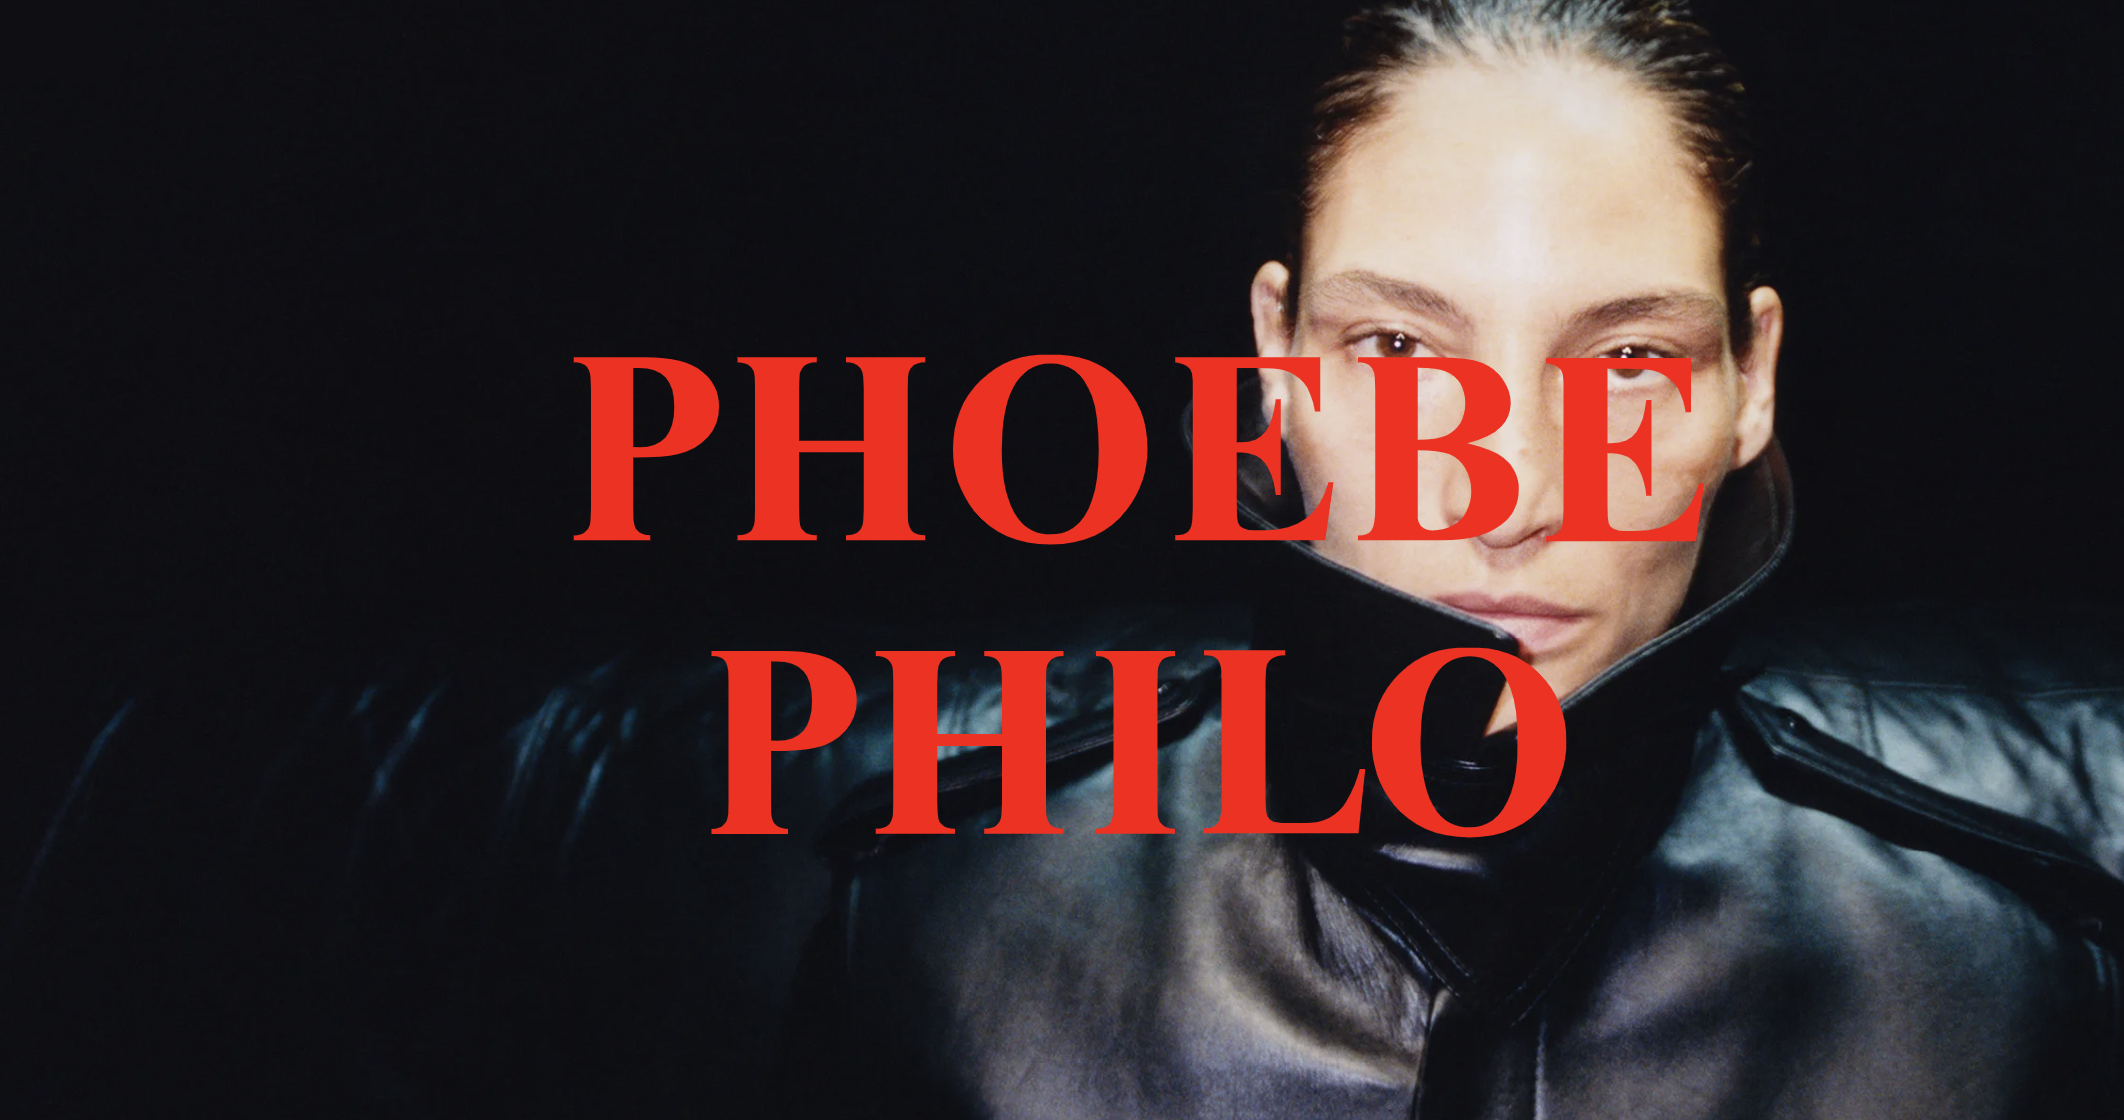 Ex-Celine Designer Phoebe Philo Is Back With Her Own Brand